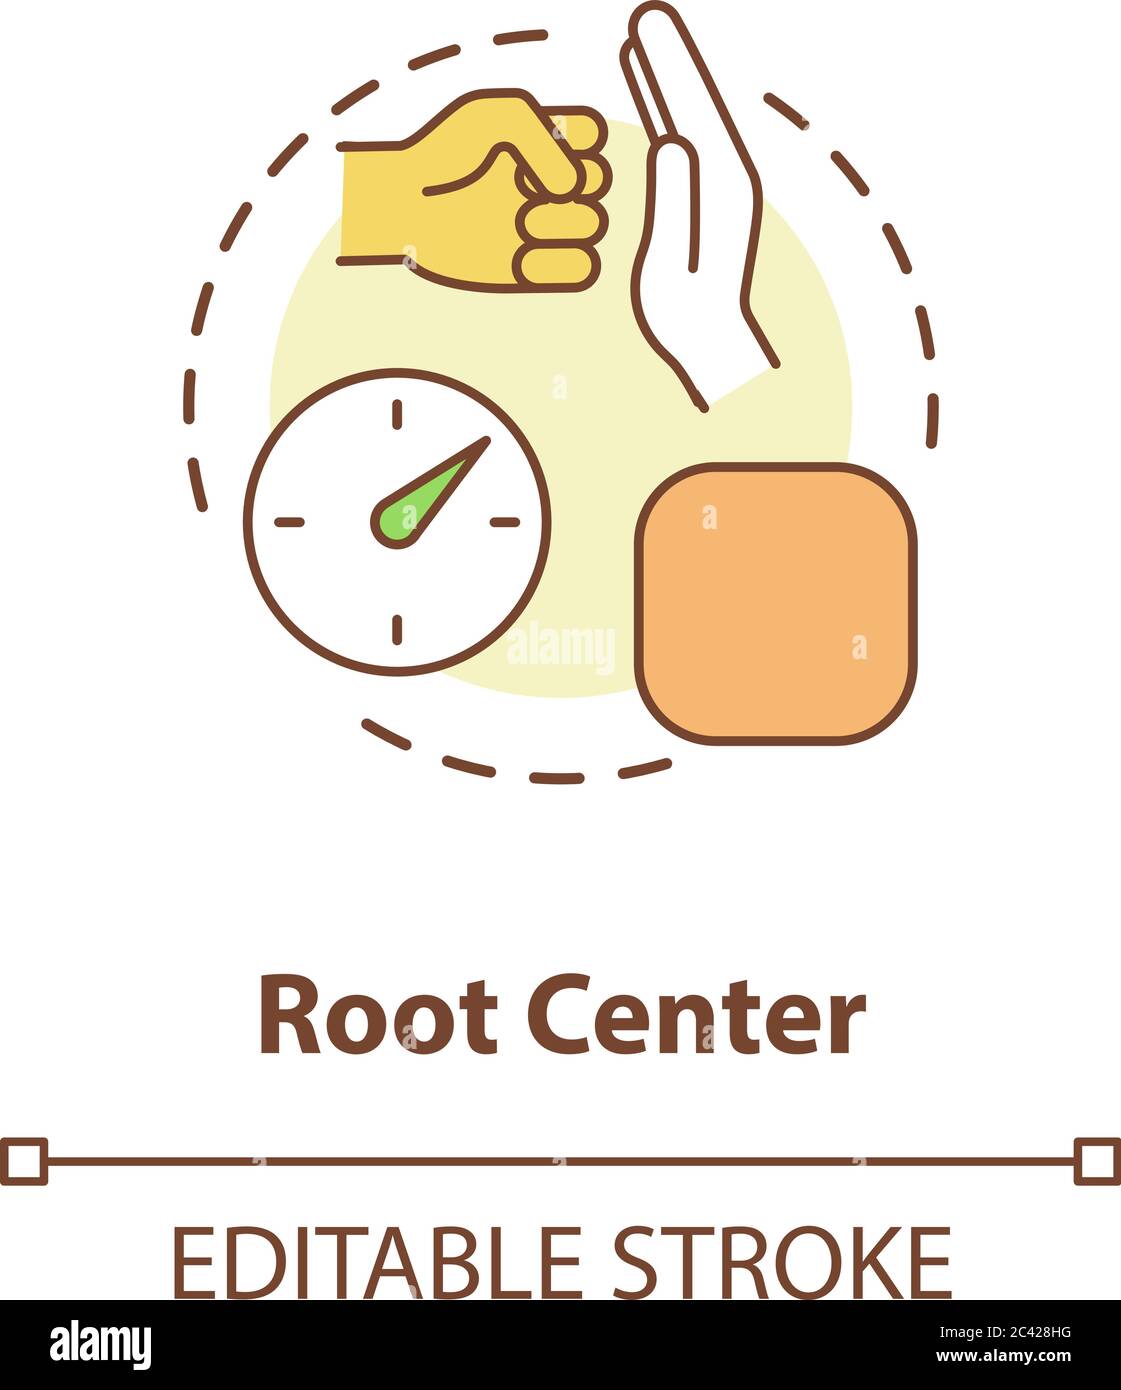 Root center concept icon Stock Vector